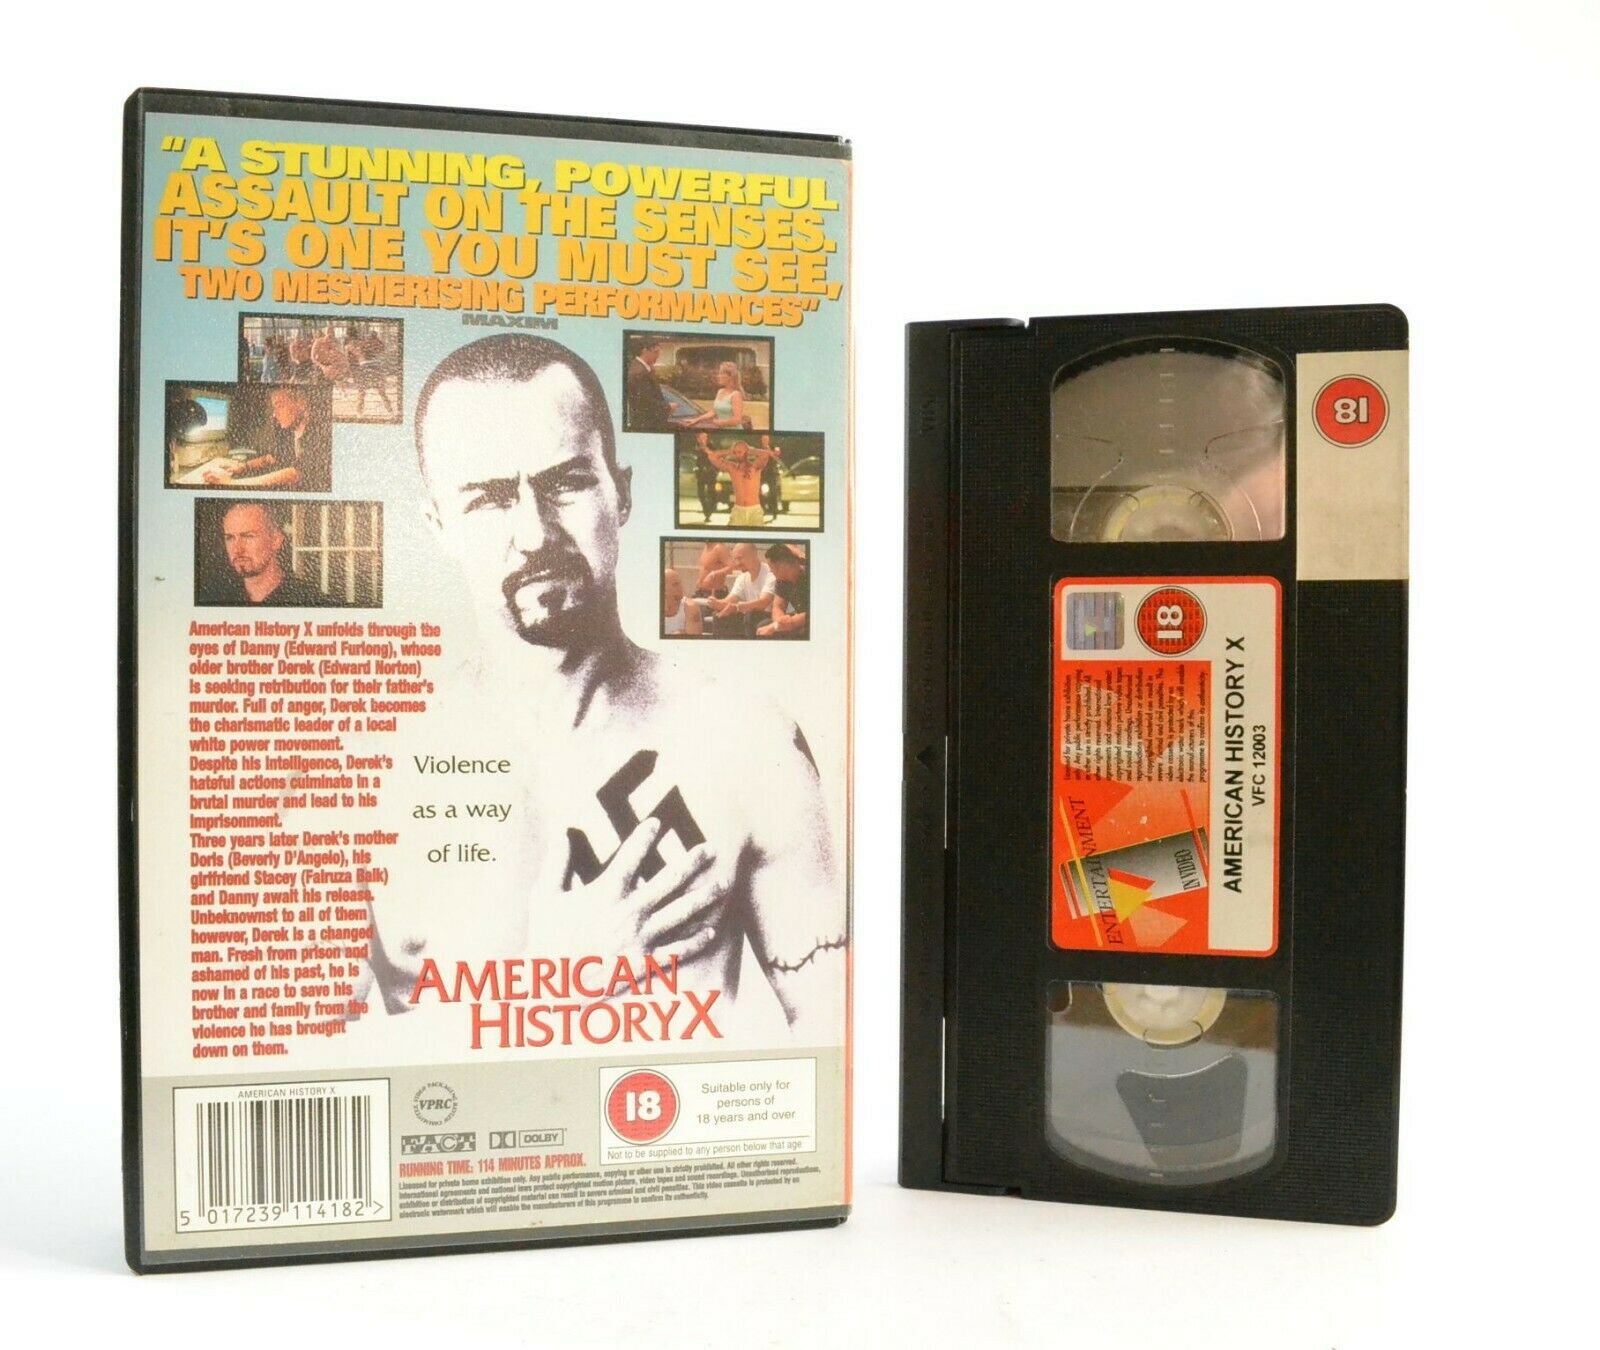 American History X: Drama (1998) - Large Box - Violence As A Way Of Life - VHS-